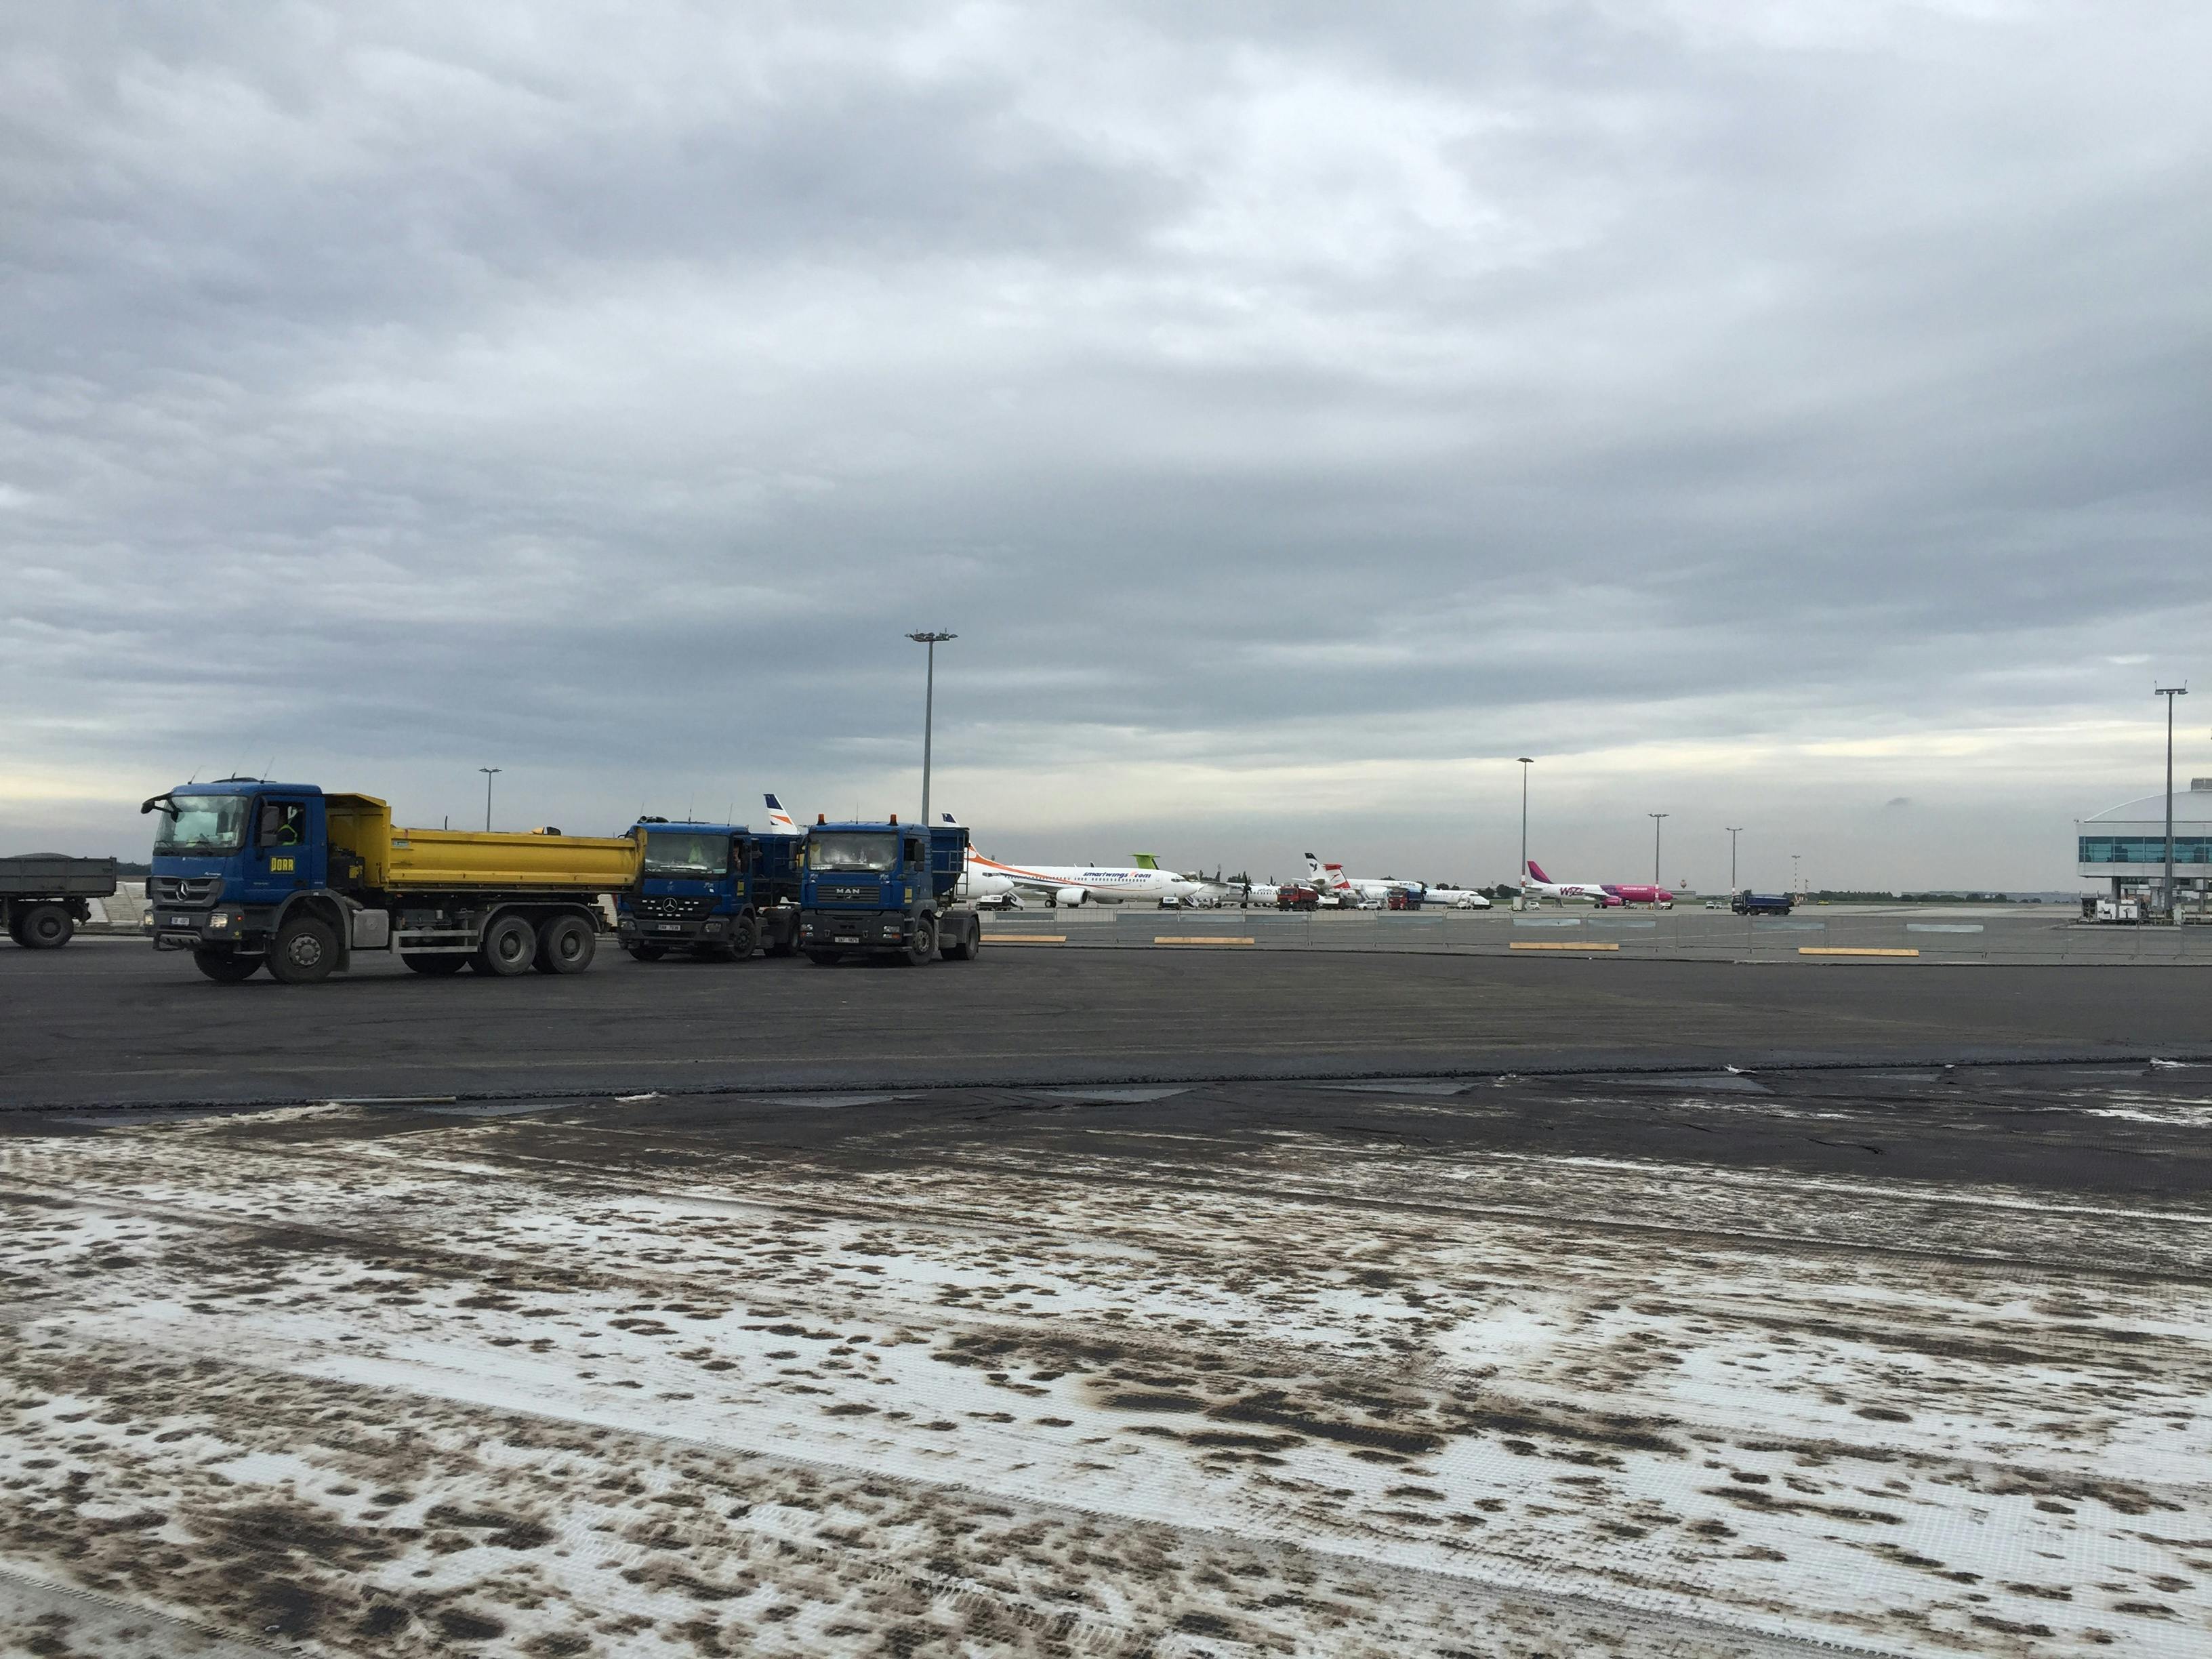 Advanced asphalt interlayer solution for Prague airport's runway